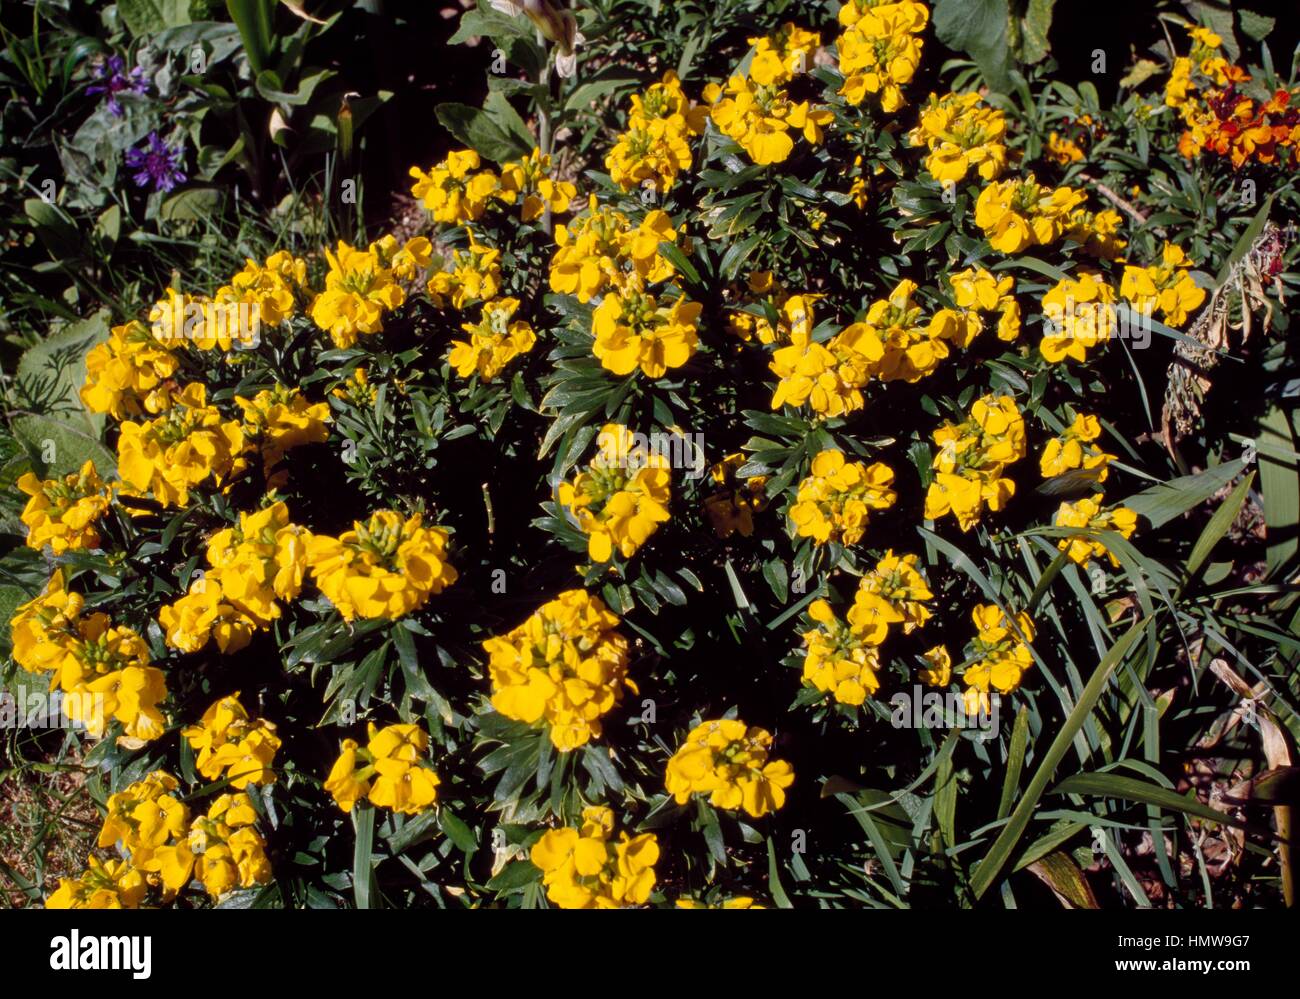 Aegean Wallflower (Erysimum cheiri), Brassicaceae. Stock Photo